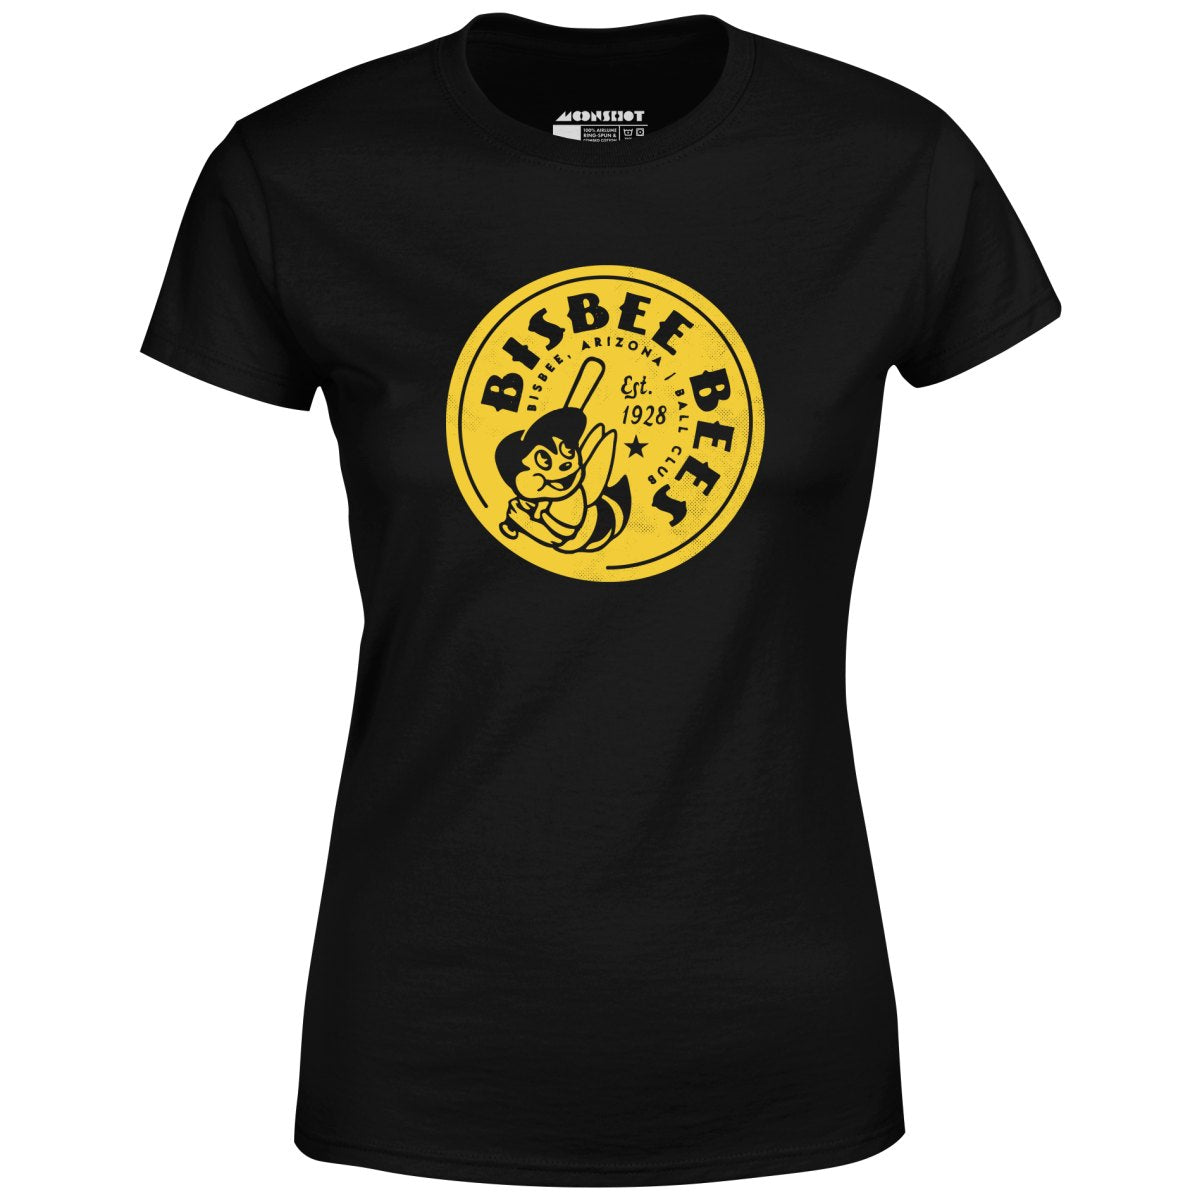 Bisbee Bees - Arizona - Vintage Defunct Baseball Teams - Women's T-Shirt